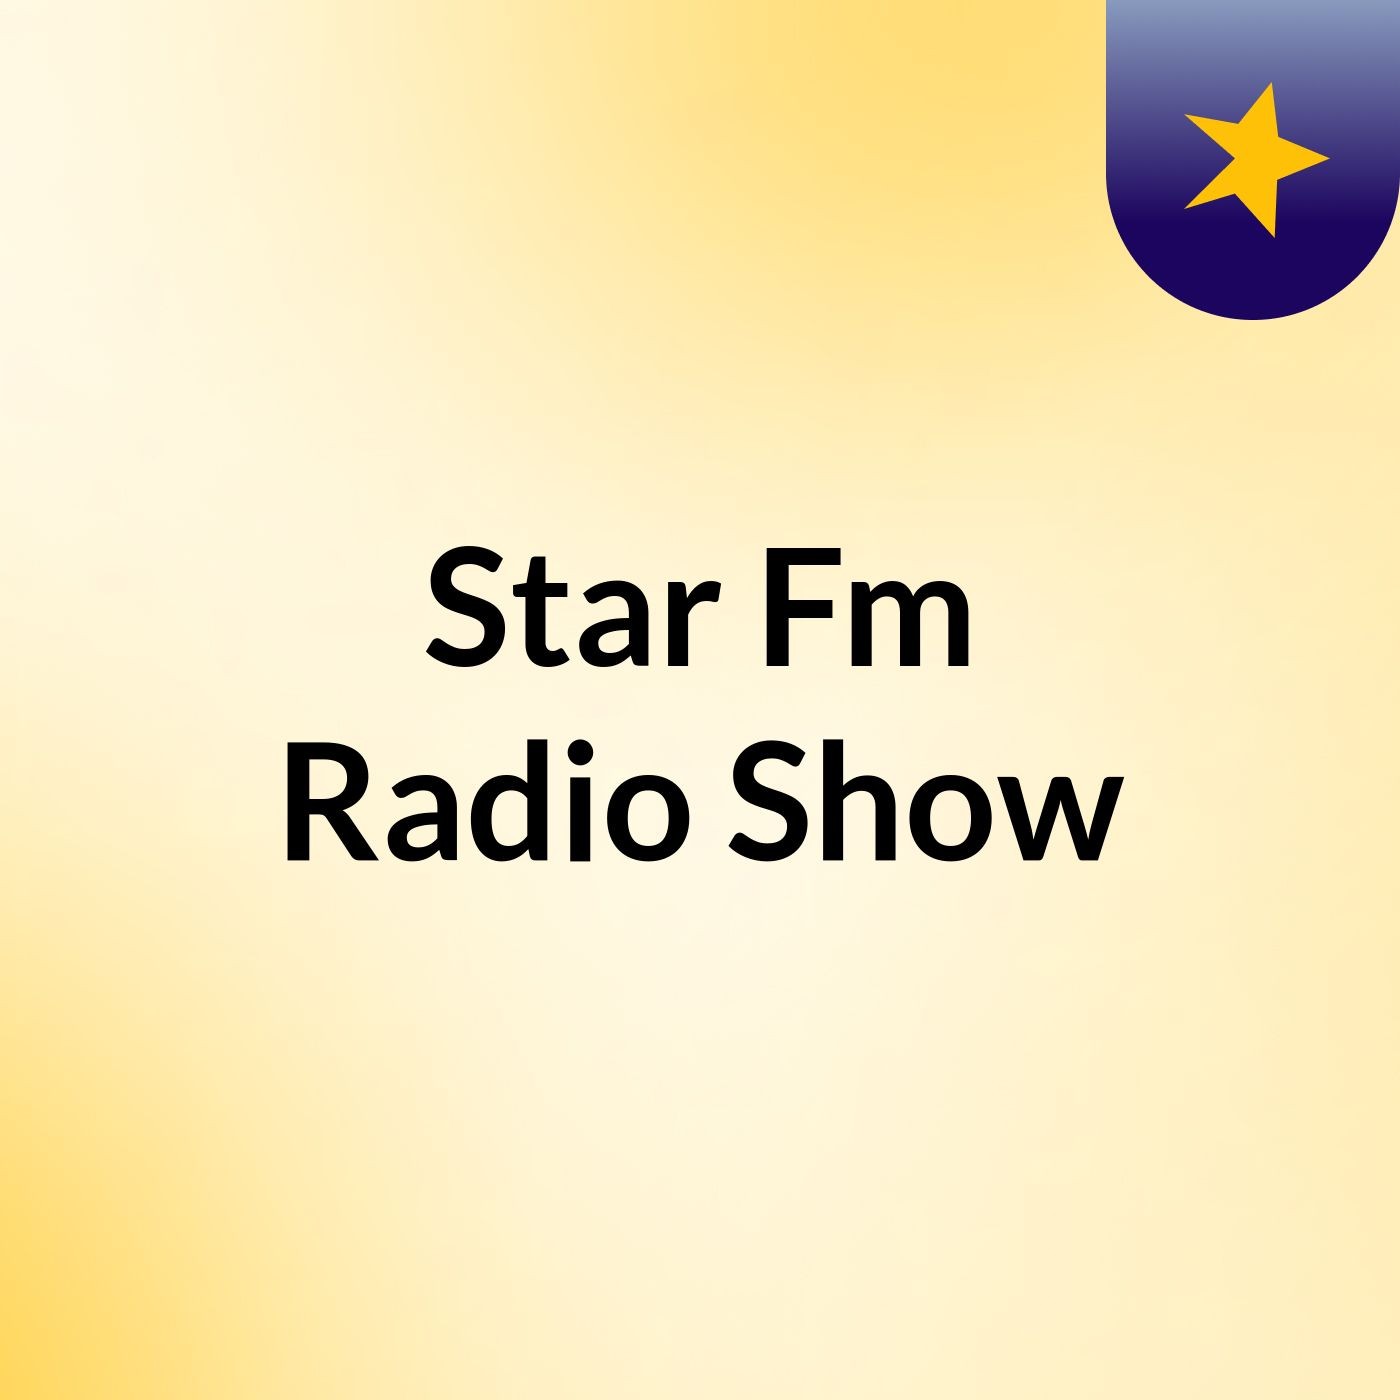 Star Fm Radio Show